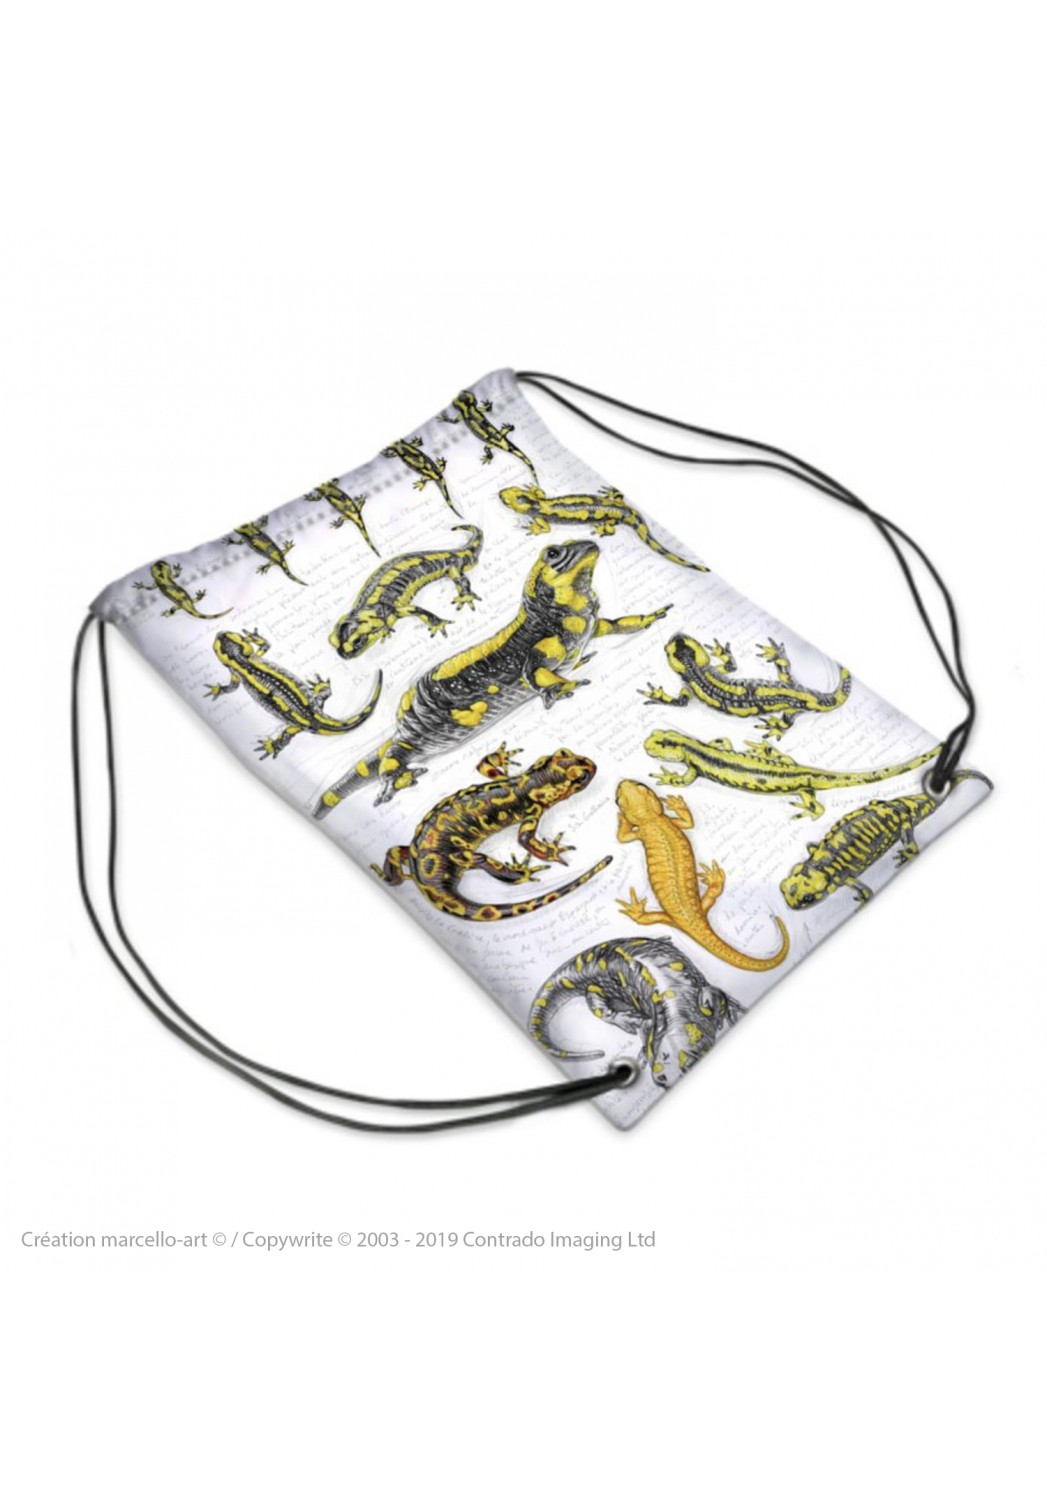 Marcello-art: Fashion accessory Sports bag 383 salamander